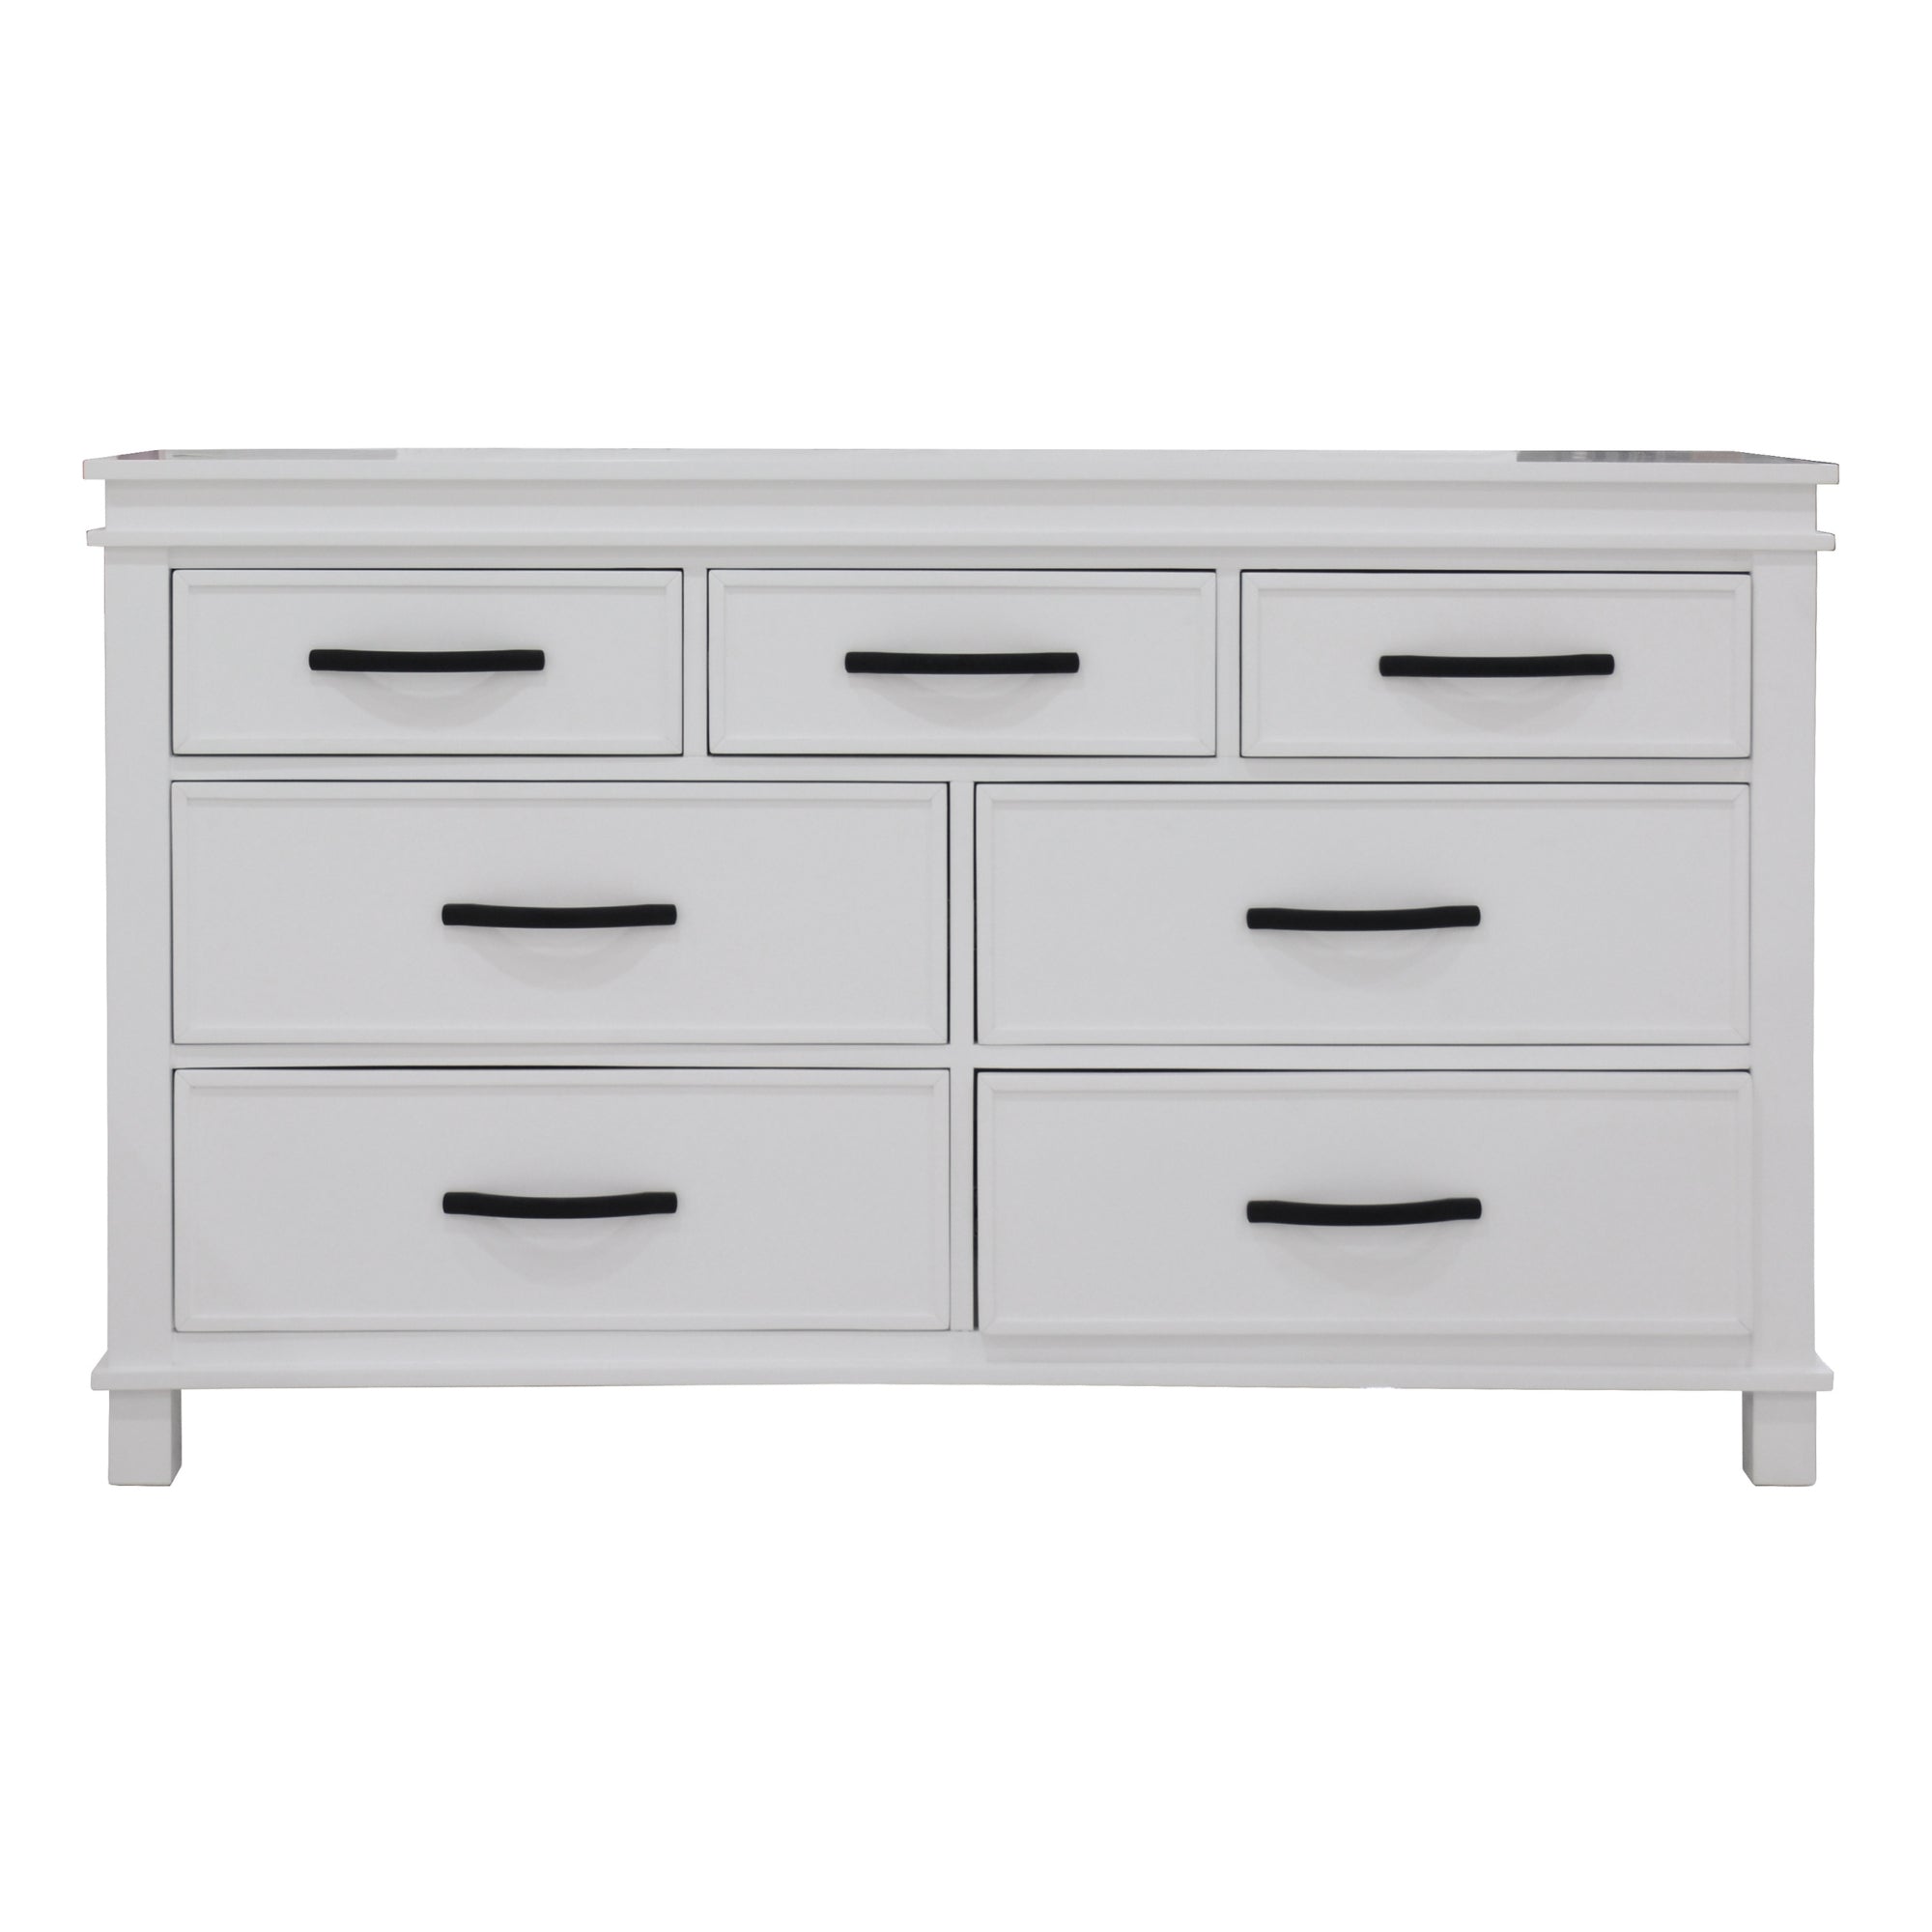 Solid Wood 7-Drawer Dresser with Metal Handles, Tallboy Storage - White